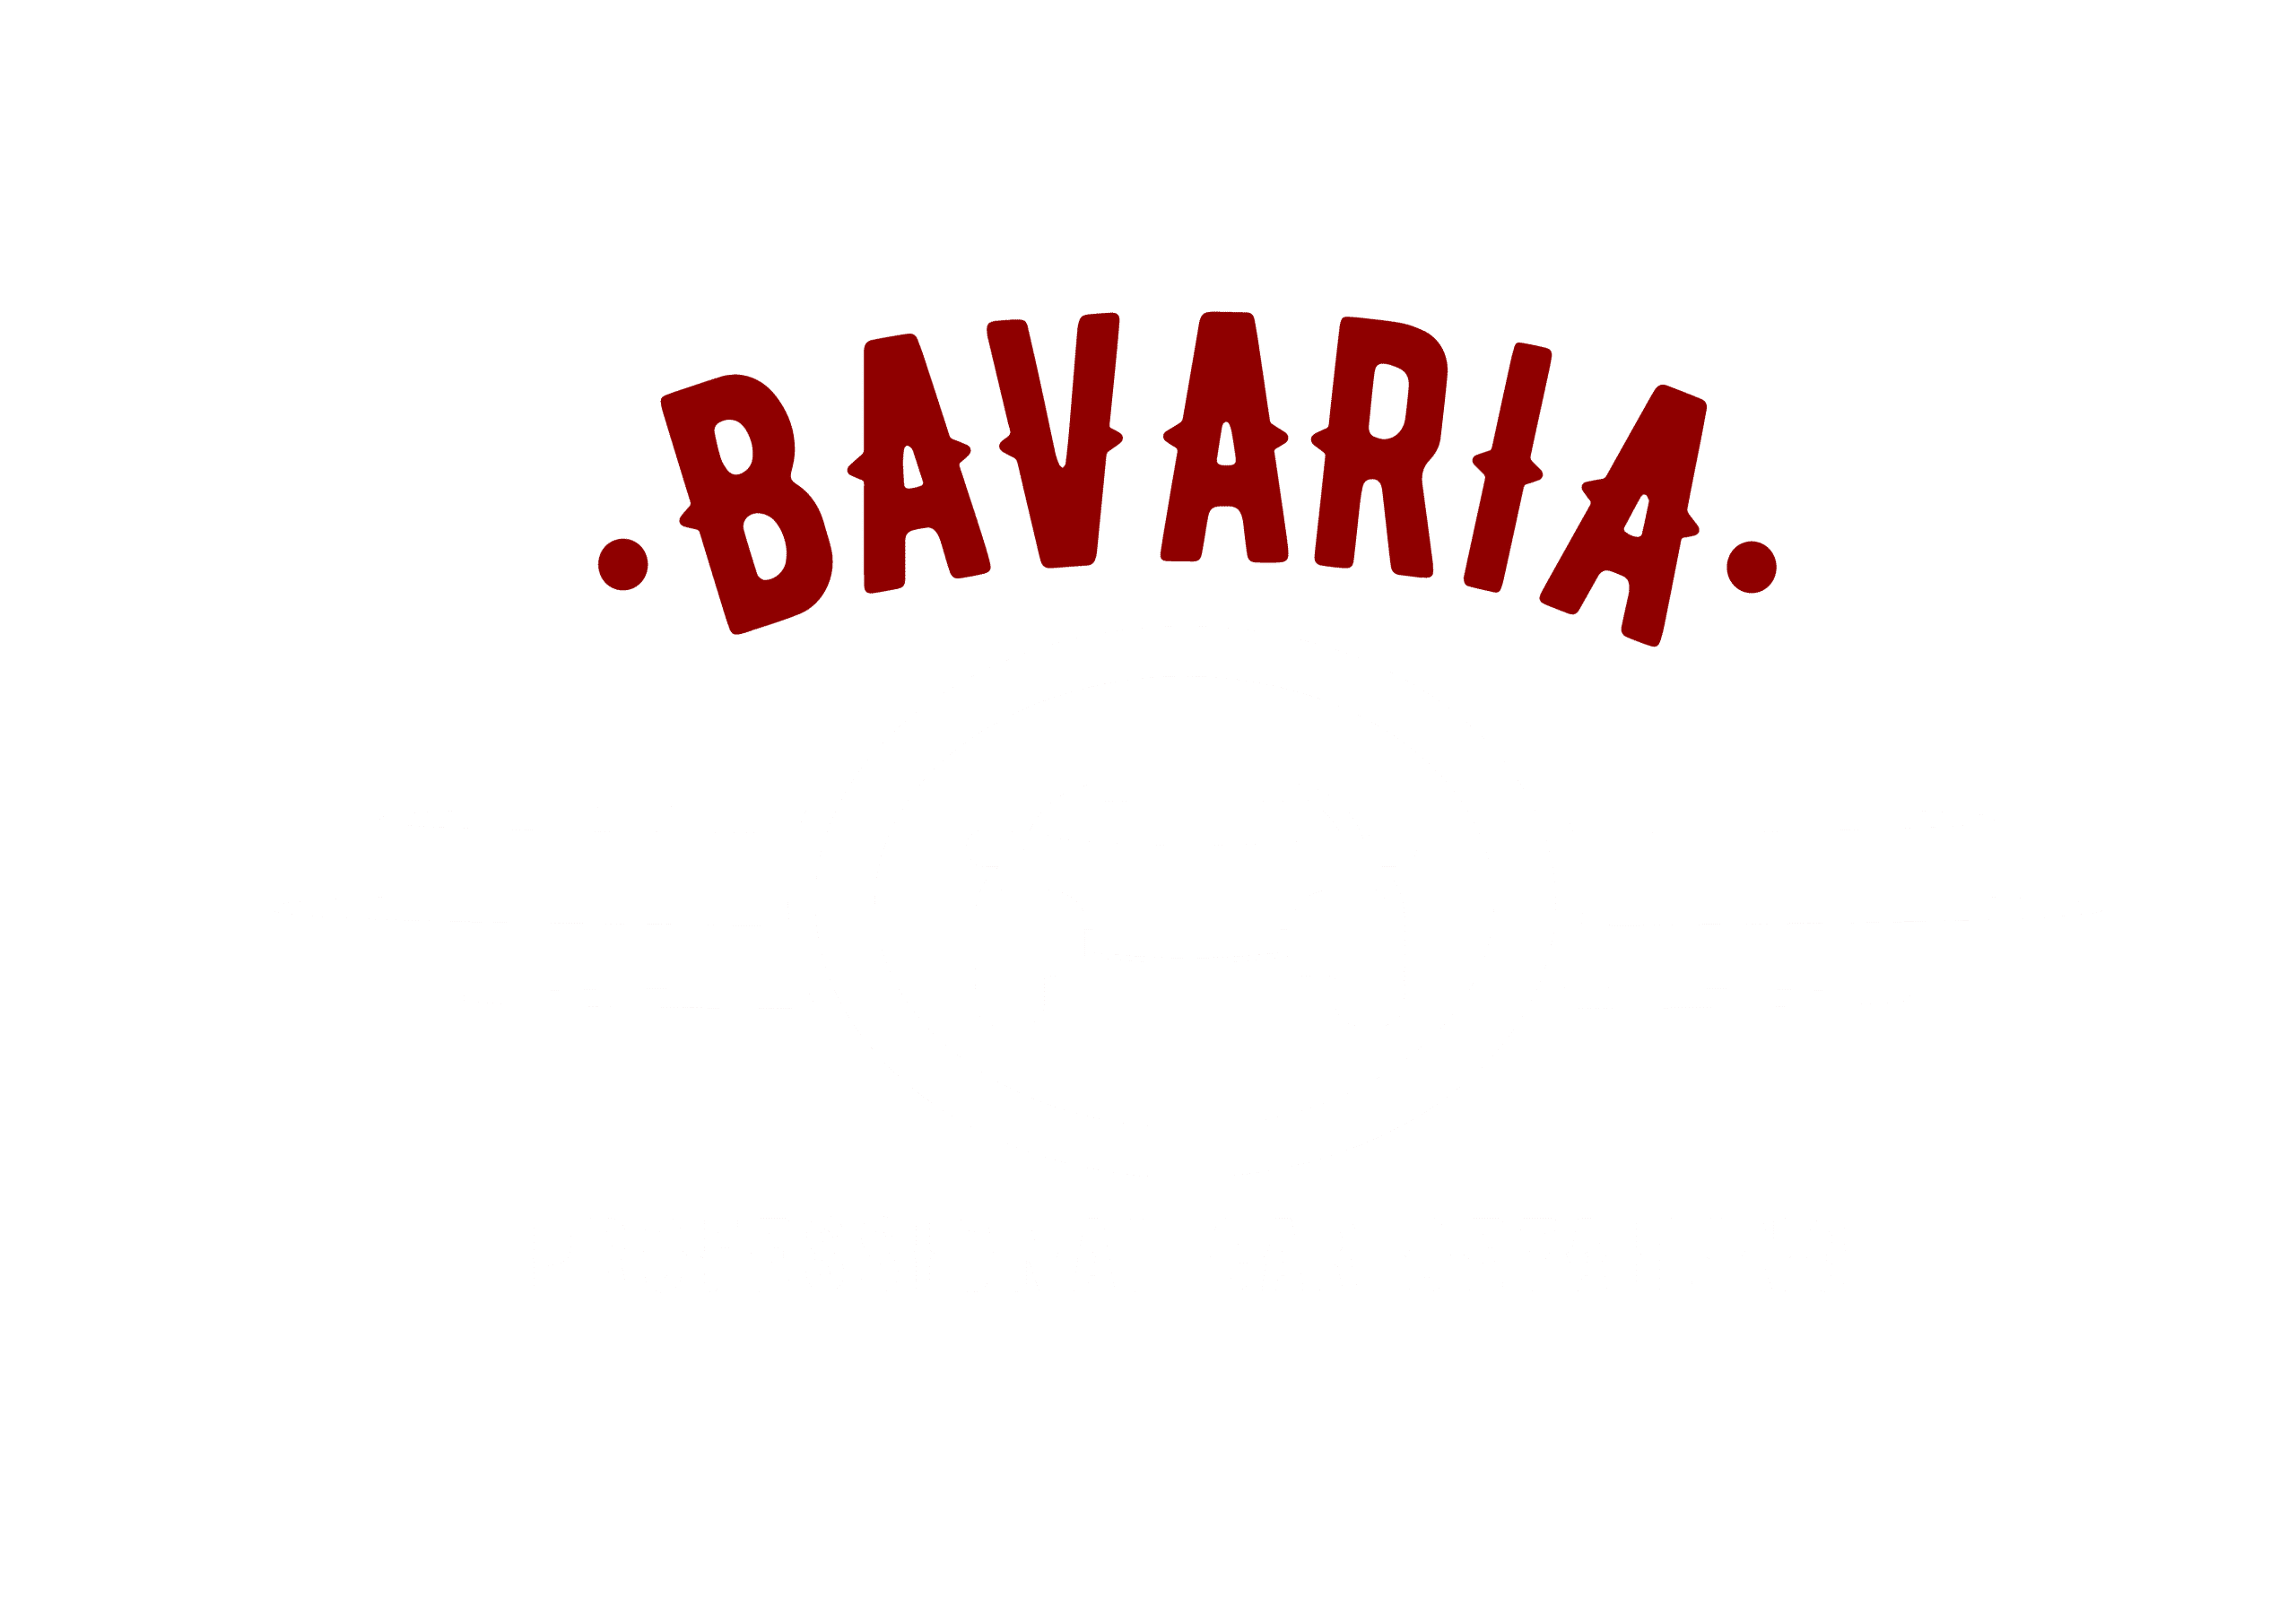 Bavaria professional car detailing